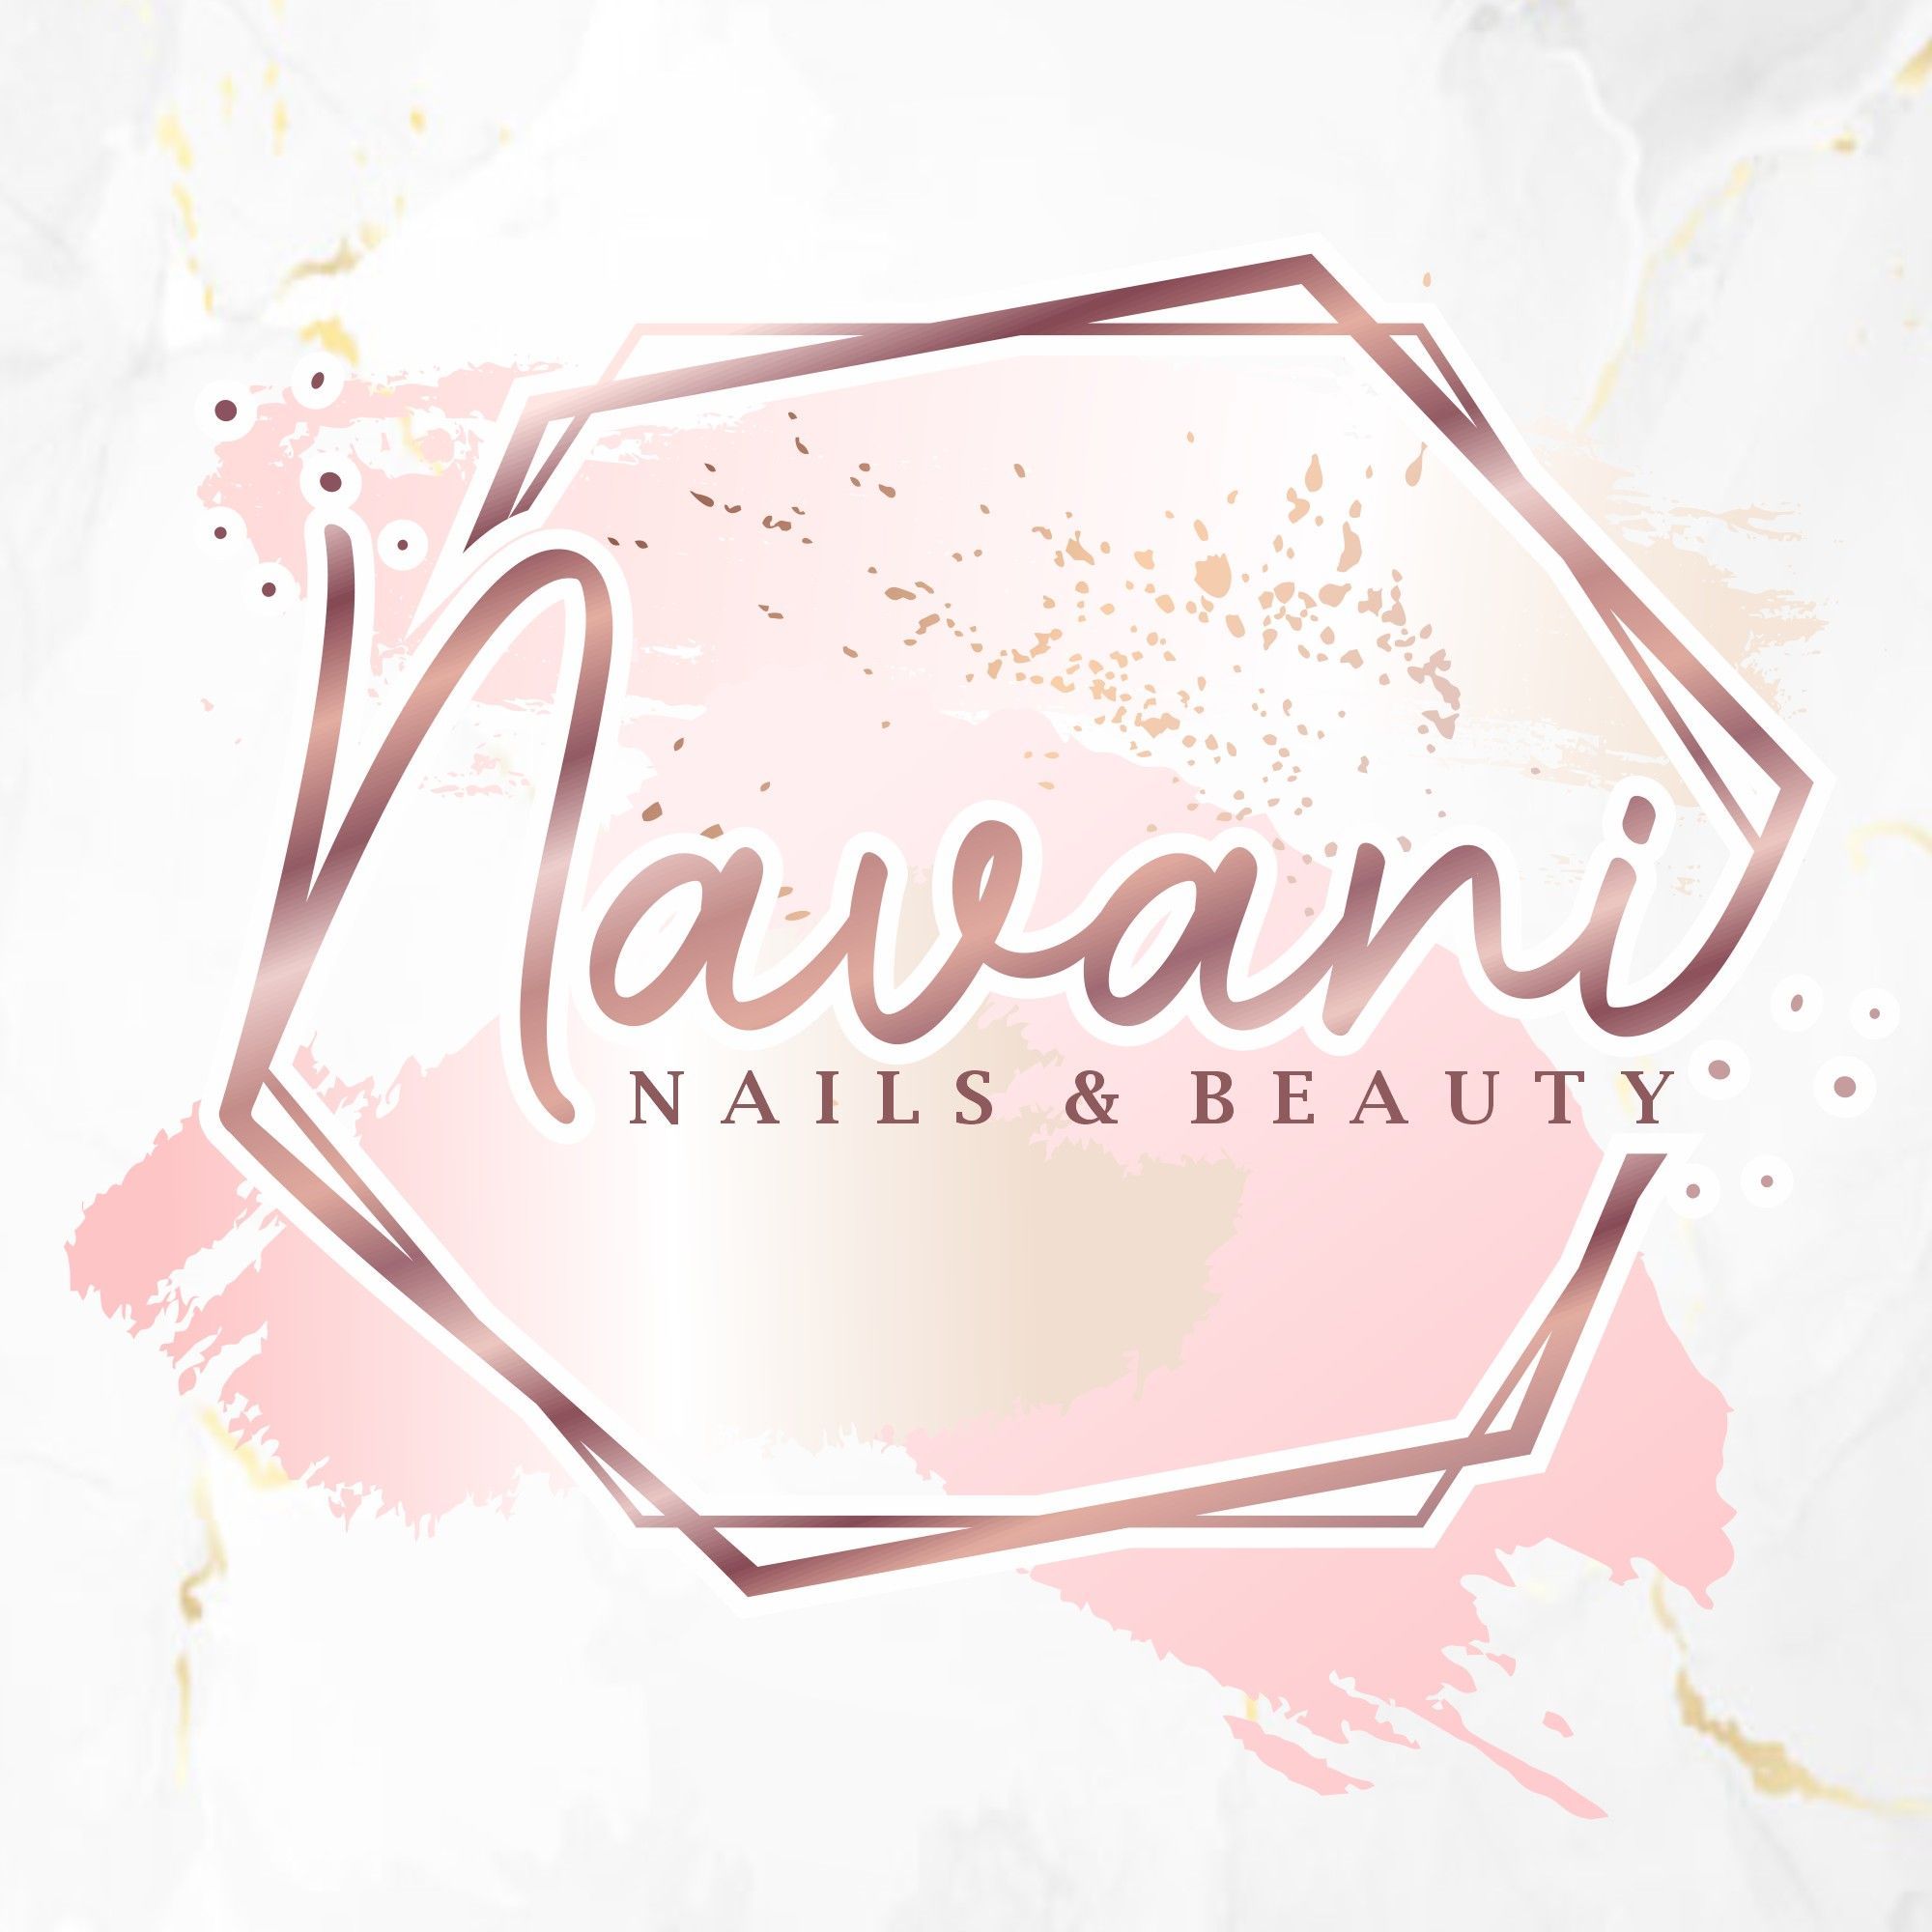 Navani  Nails & Beauty, Avenida Ignacio Allende No. 7061 Col. Azcona, Local  7, 22055, Tijuana